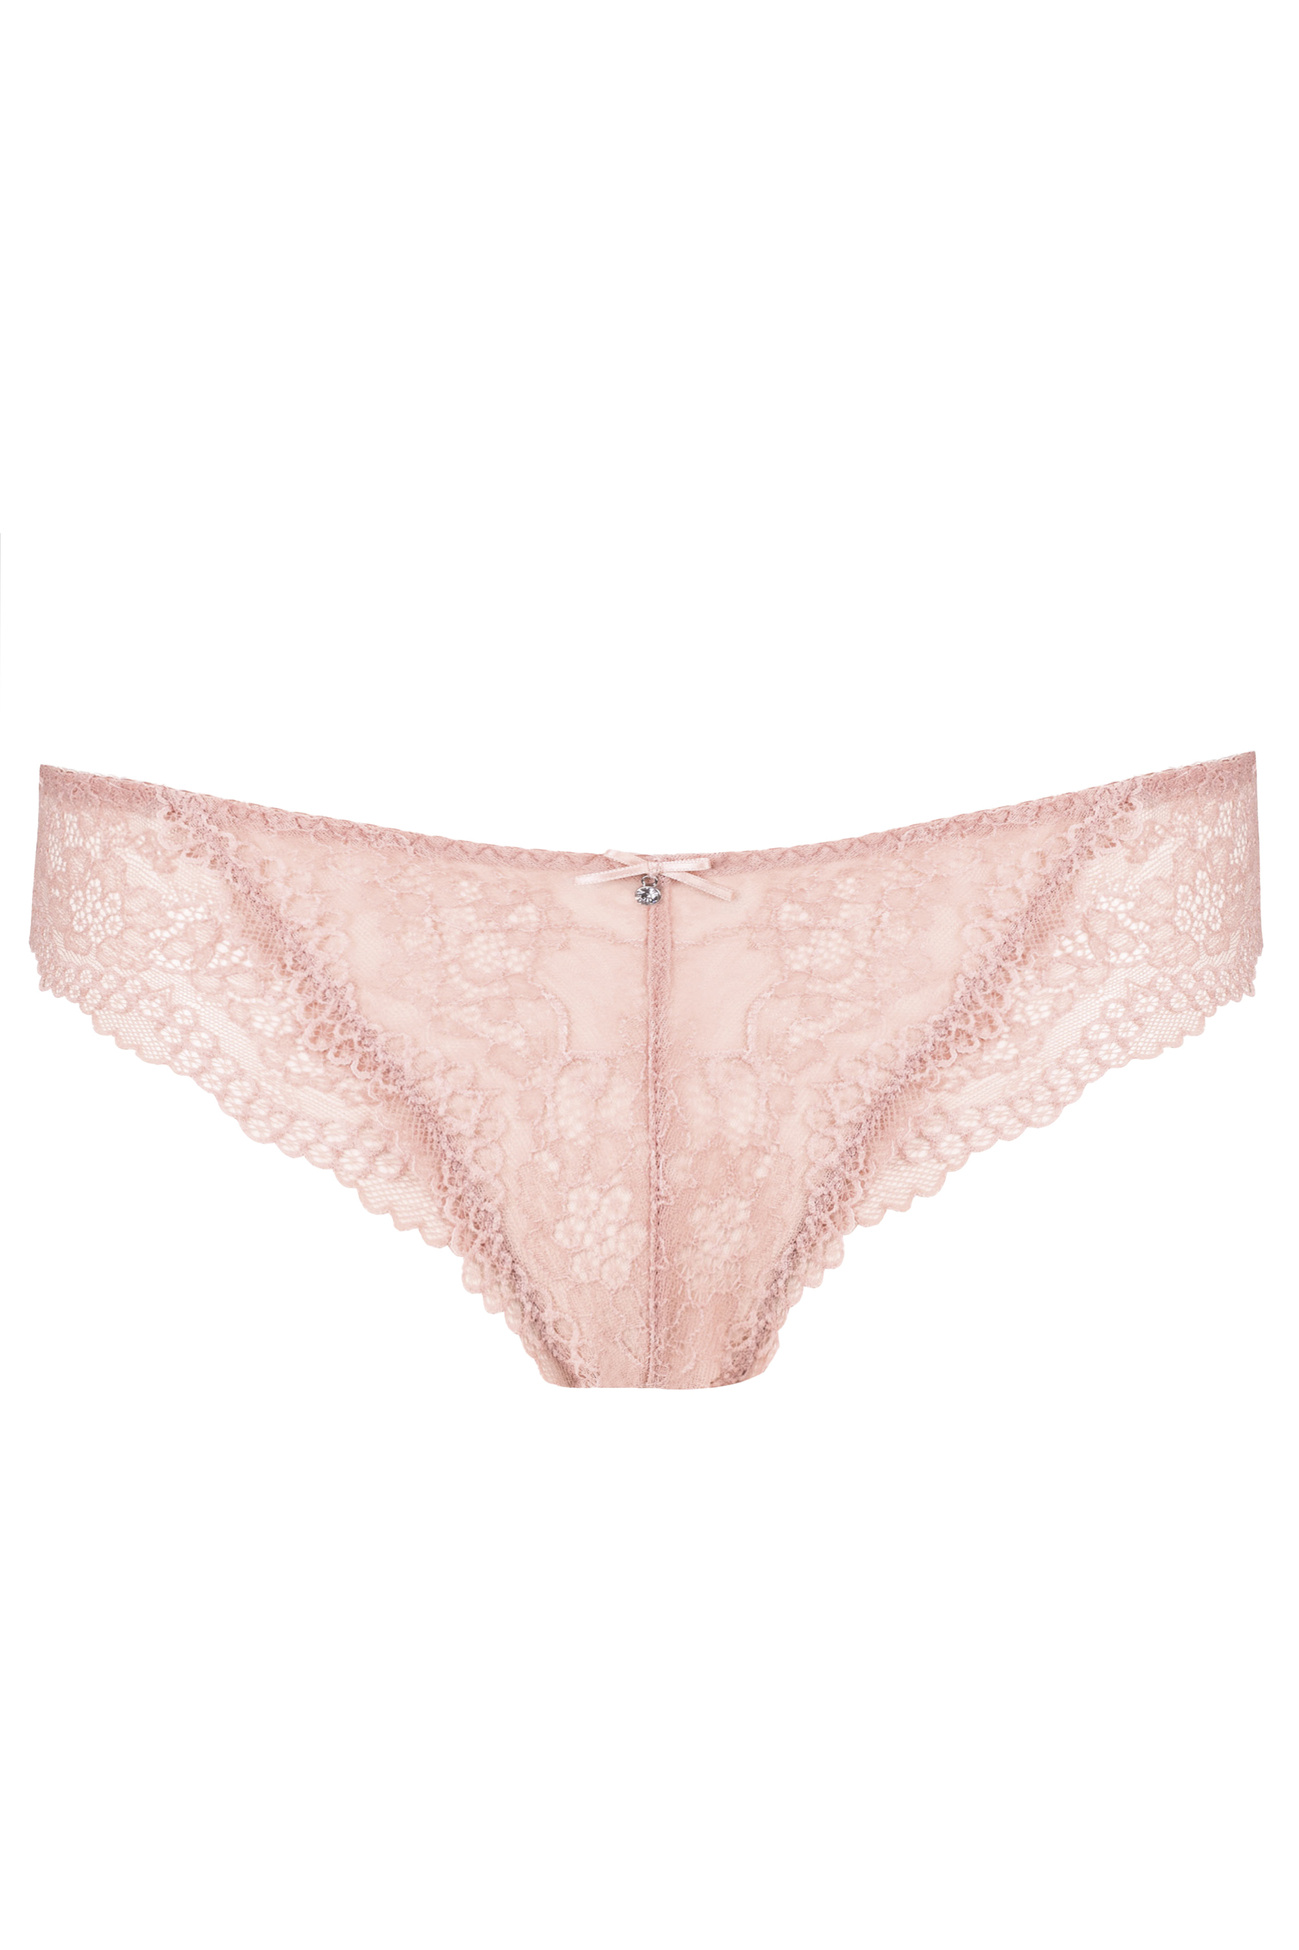 Gorteks Scarlet/F panty powder pink Spring-summer 2020 collection